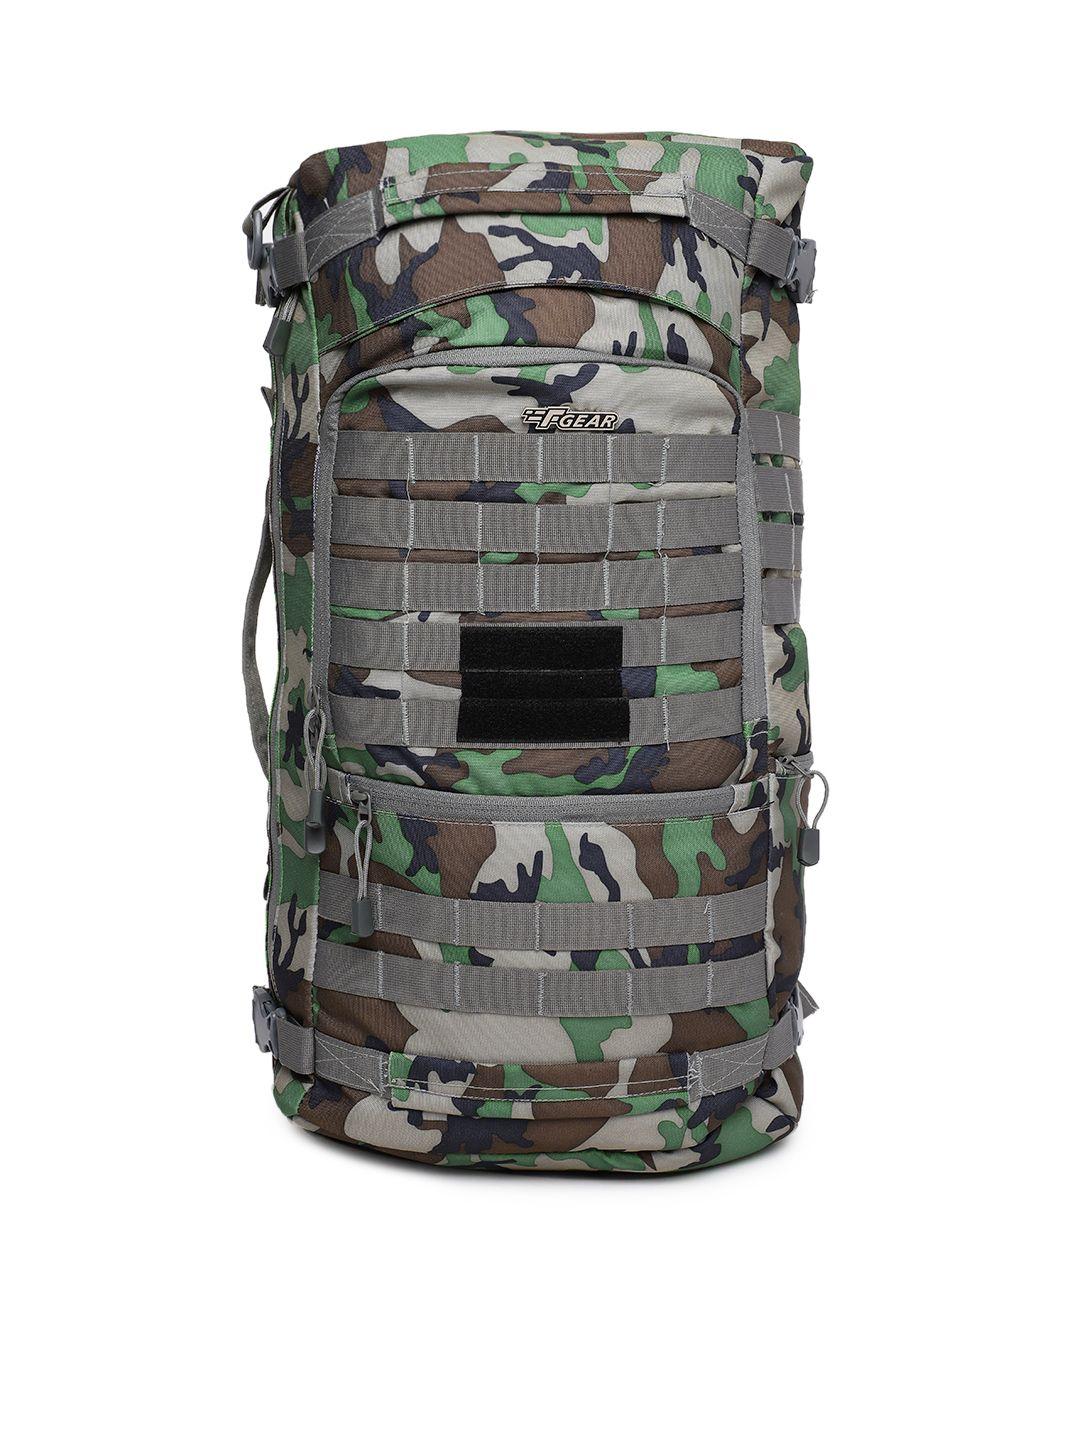 f gear unisex green printed military garrison laptop bag cum backpack